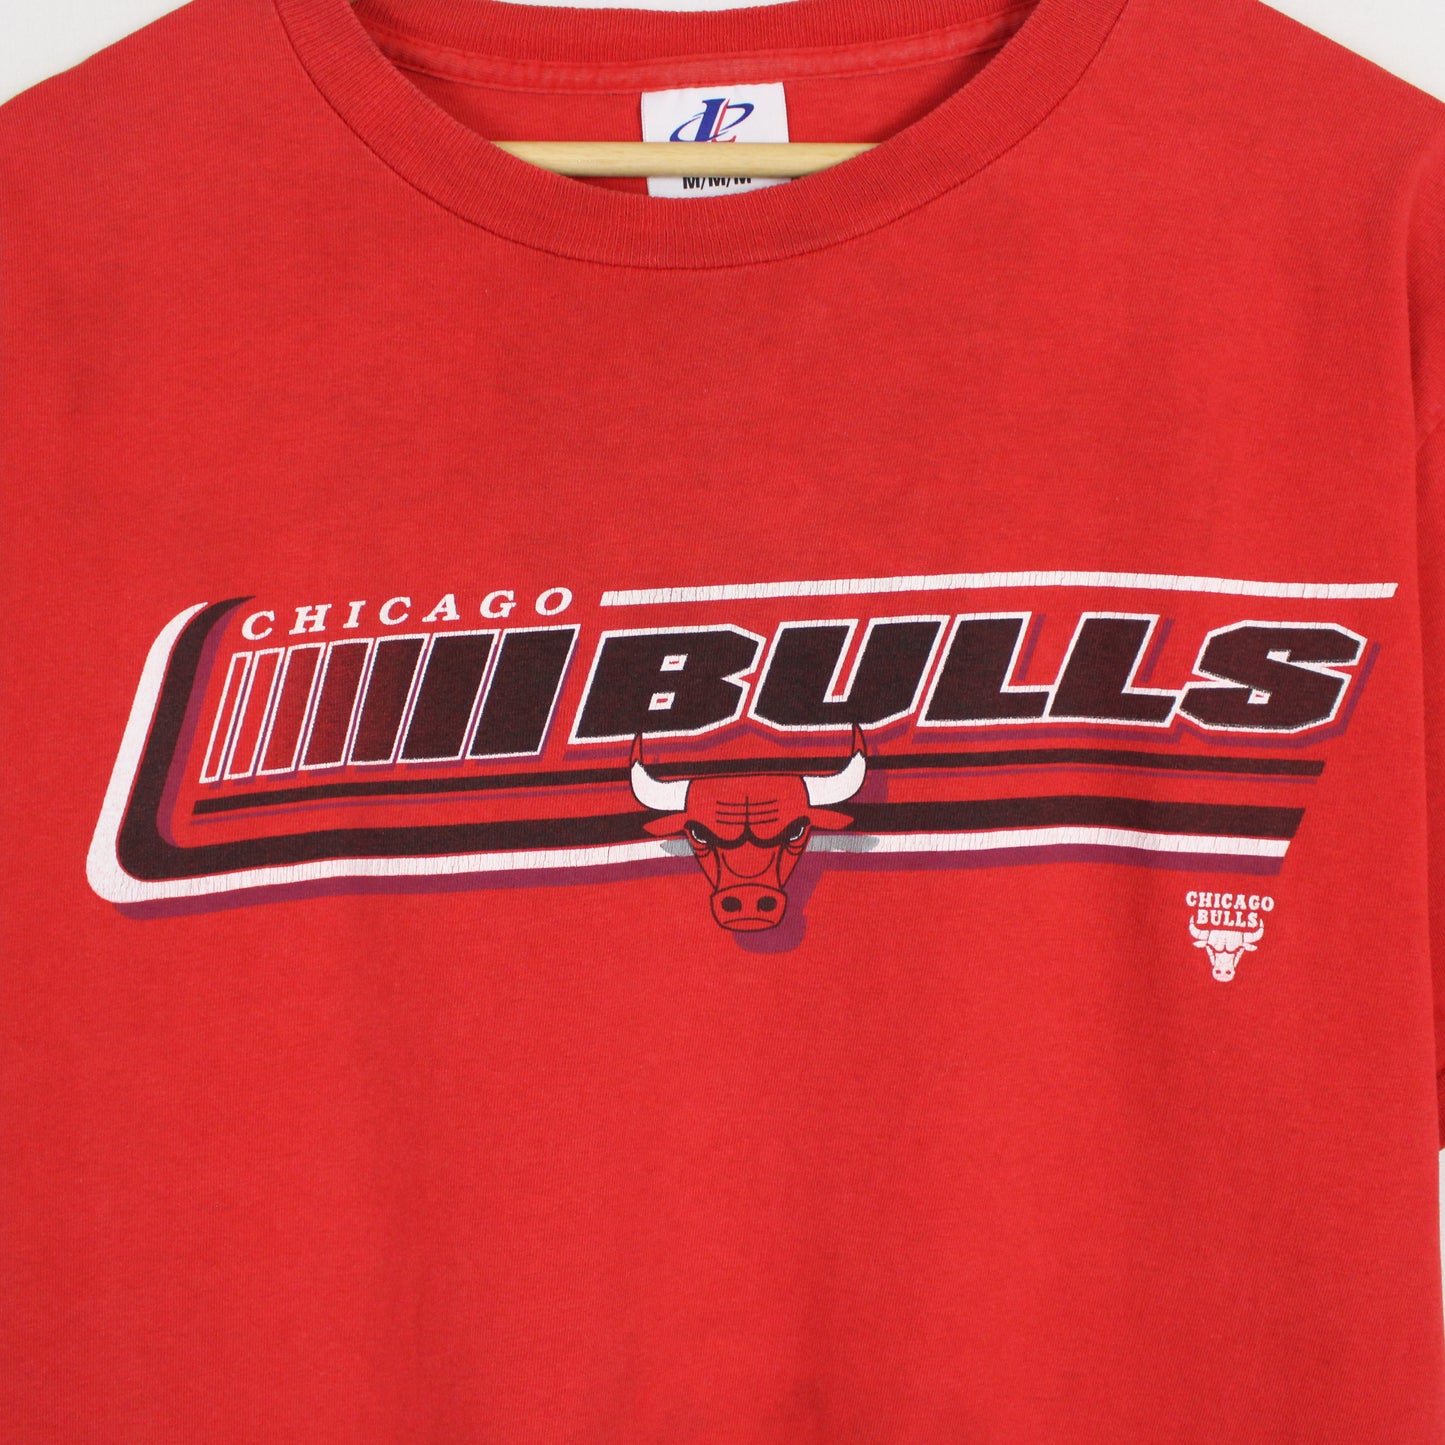 Vintage 90's Chicago Bulls NBA Tee - M